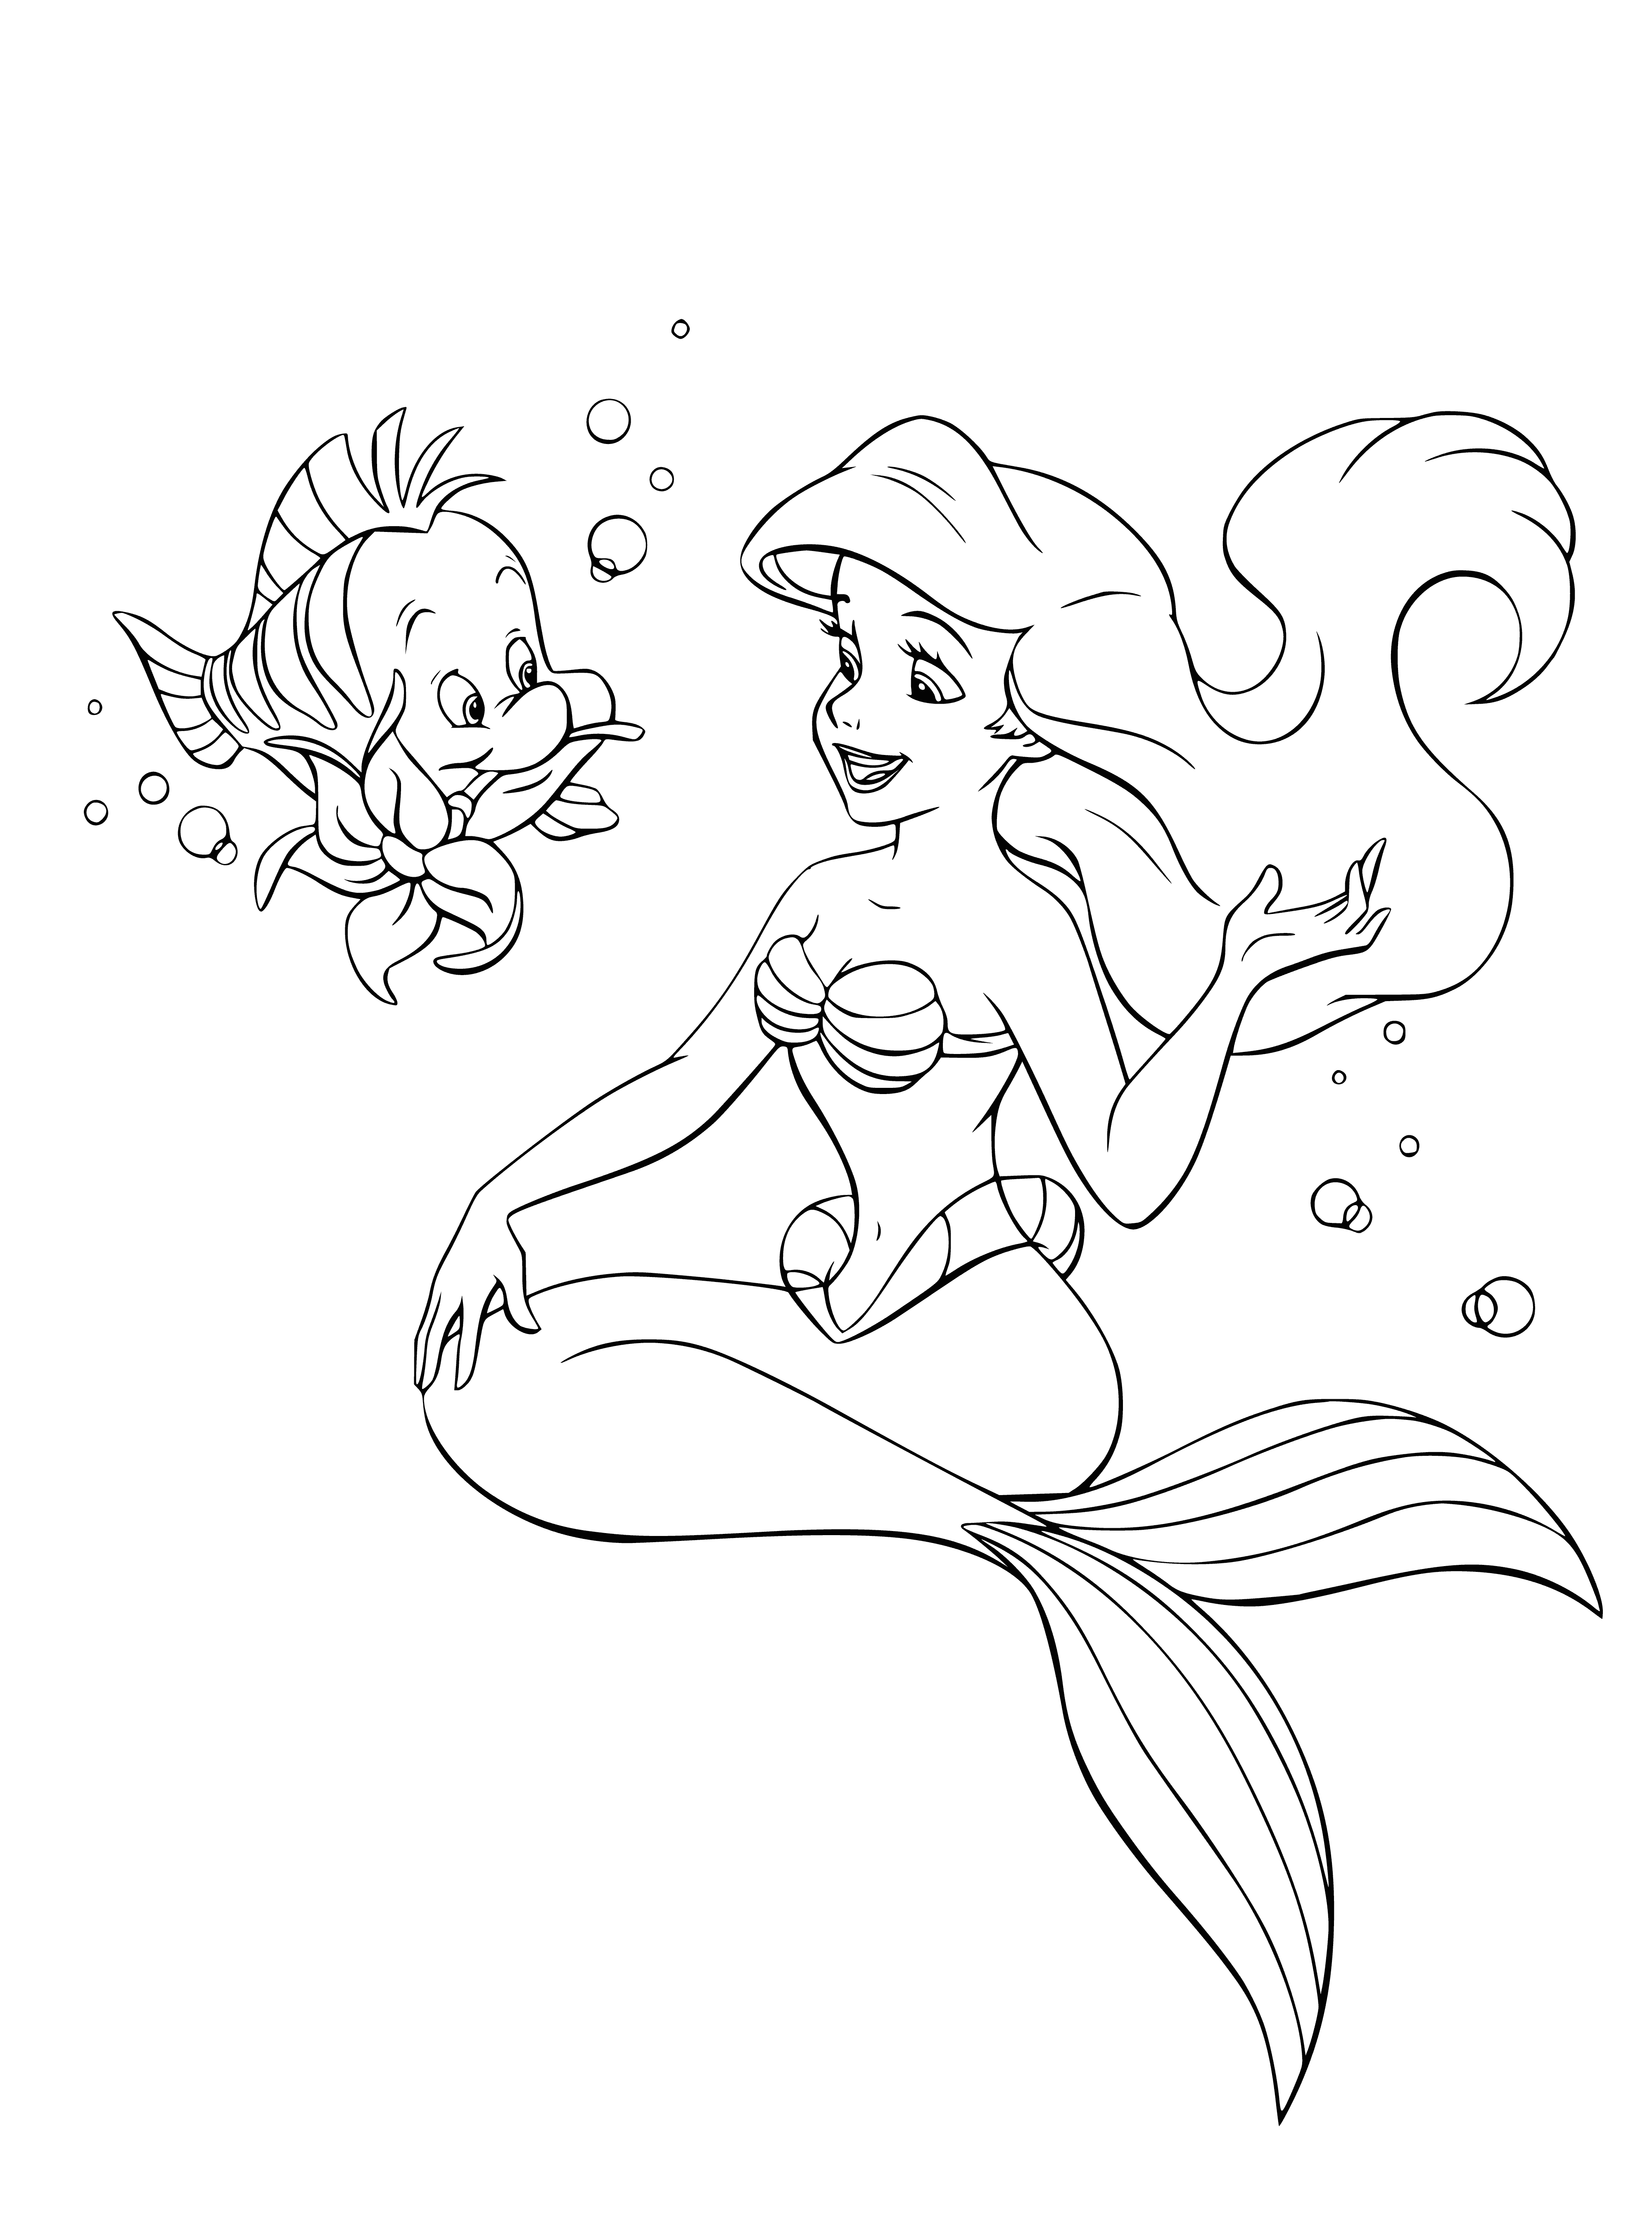 Ariel and Sebastian the Fish coloring page